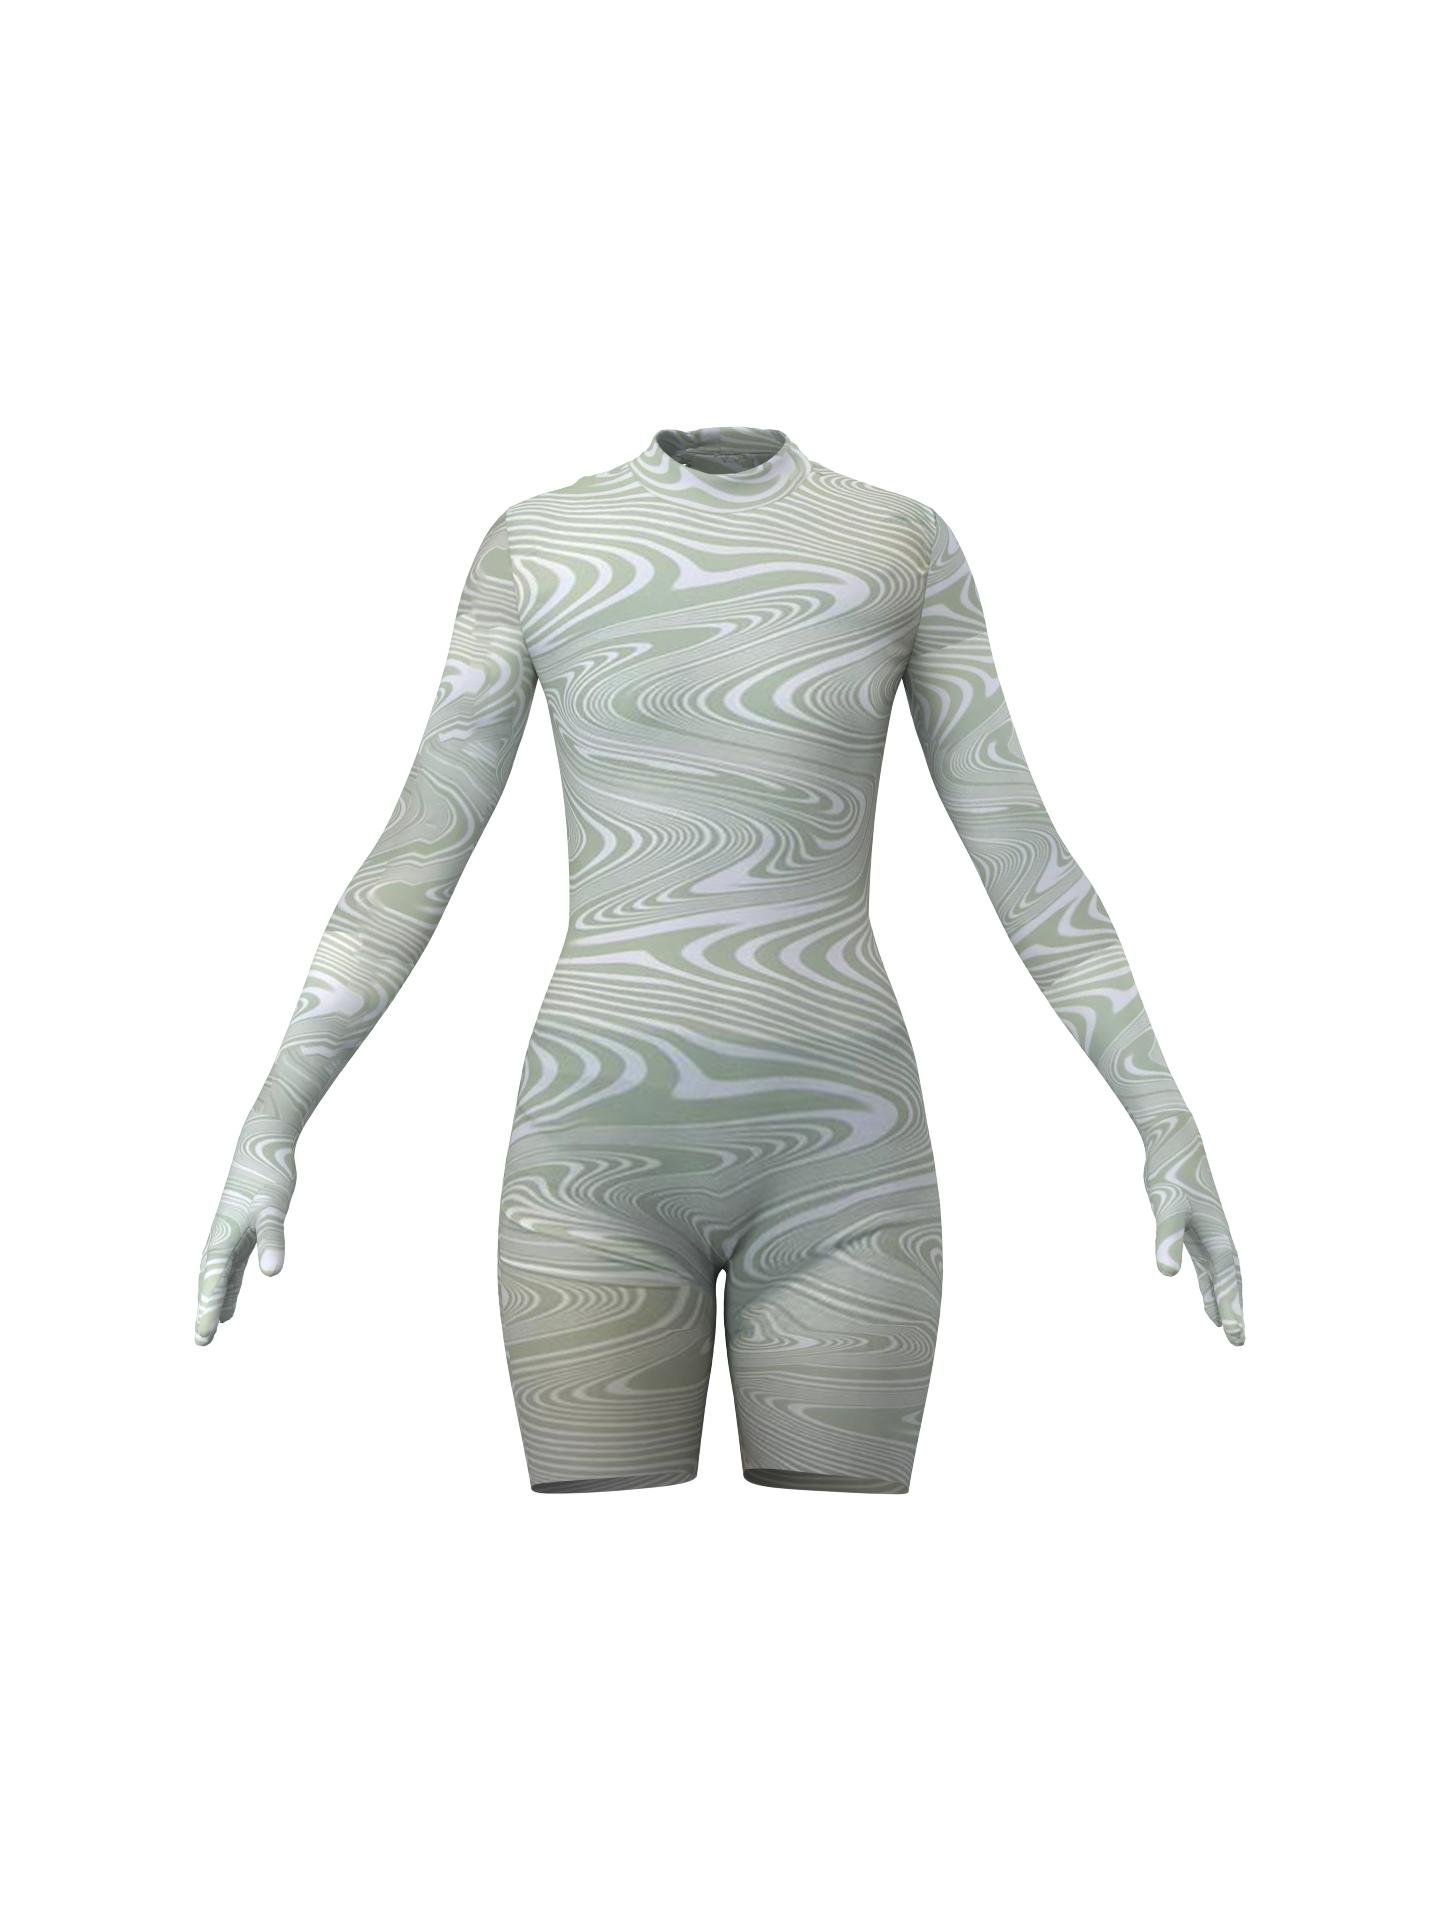 Florentina Leitner: Green Swirl bodysuit by FABRIX